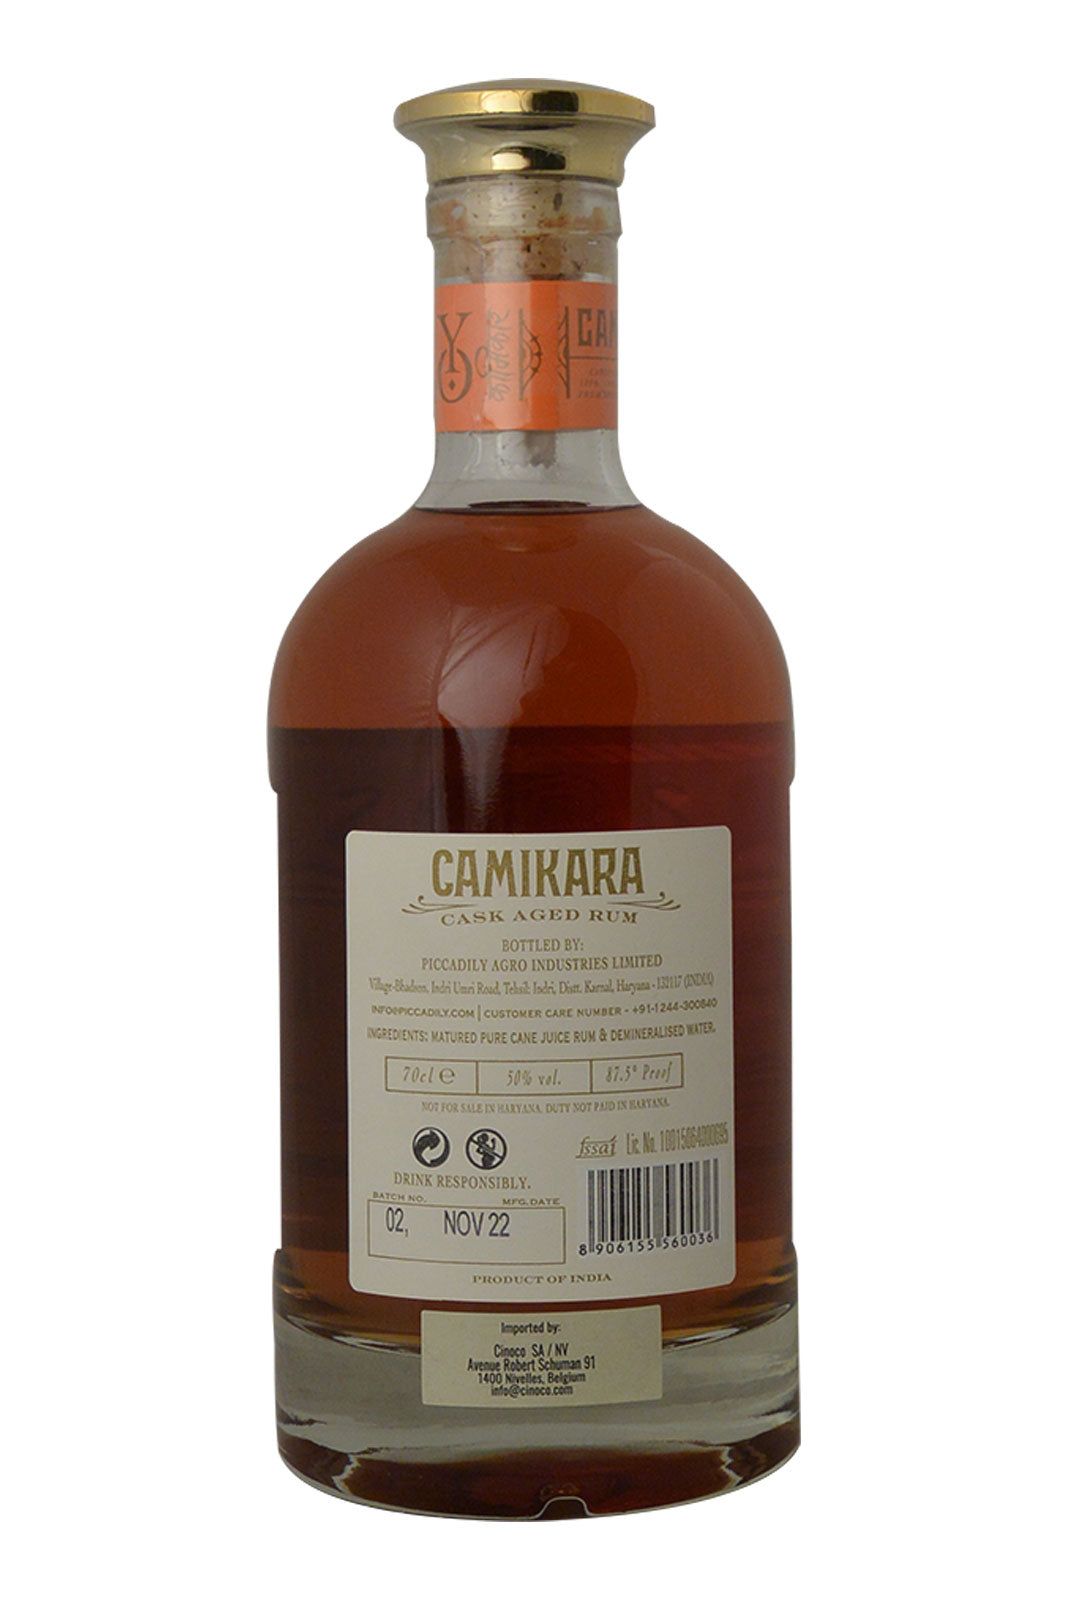 Camikara 12 Year Old Rum